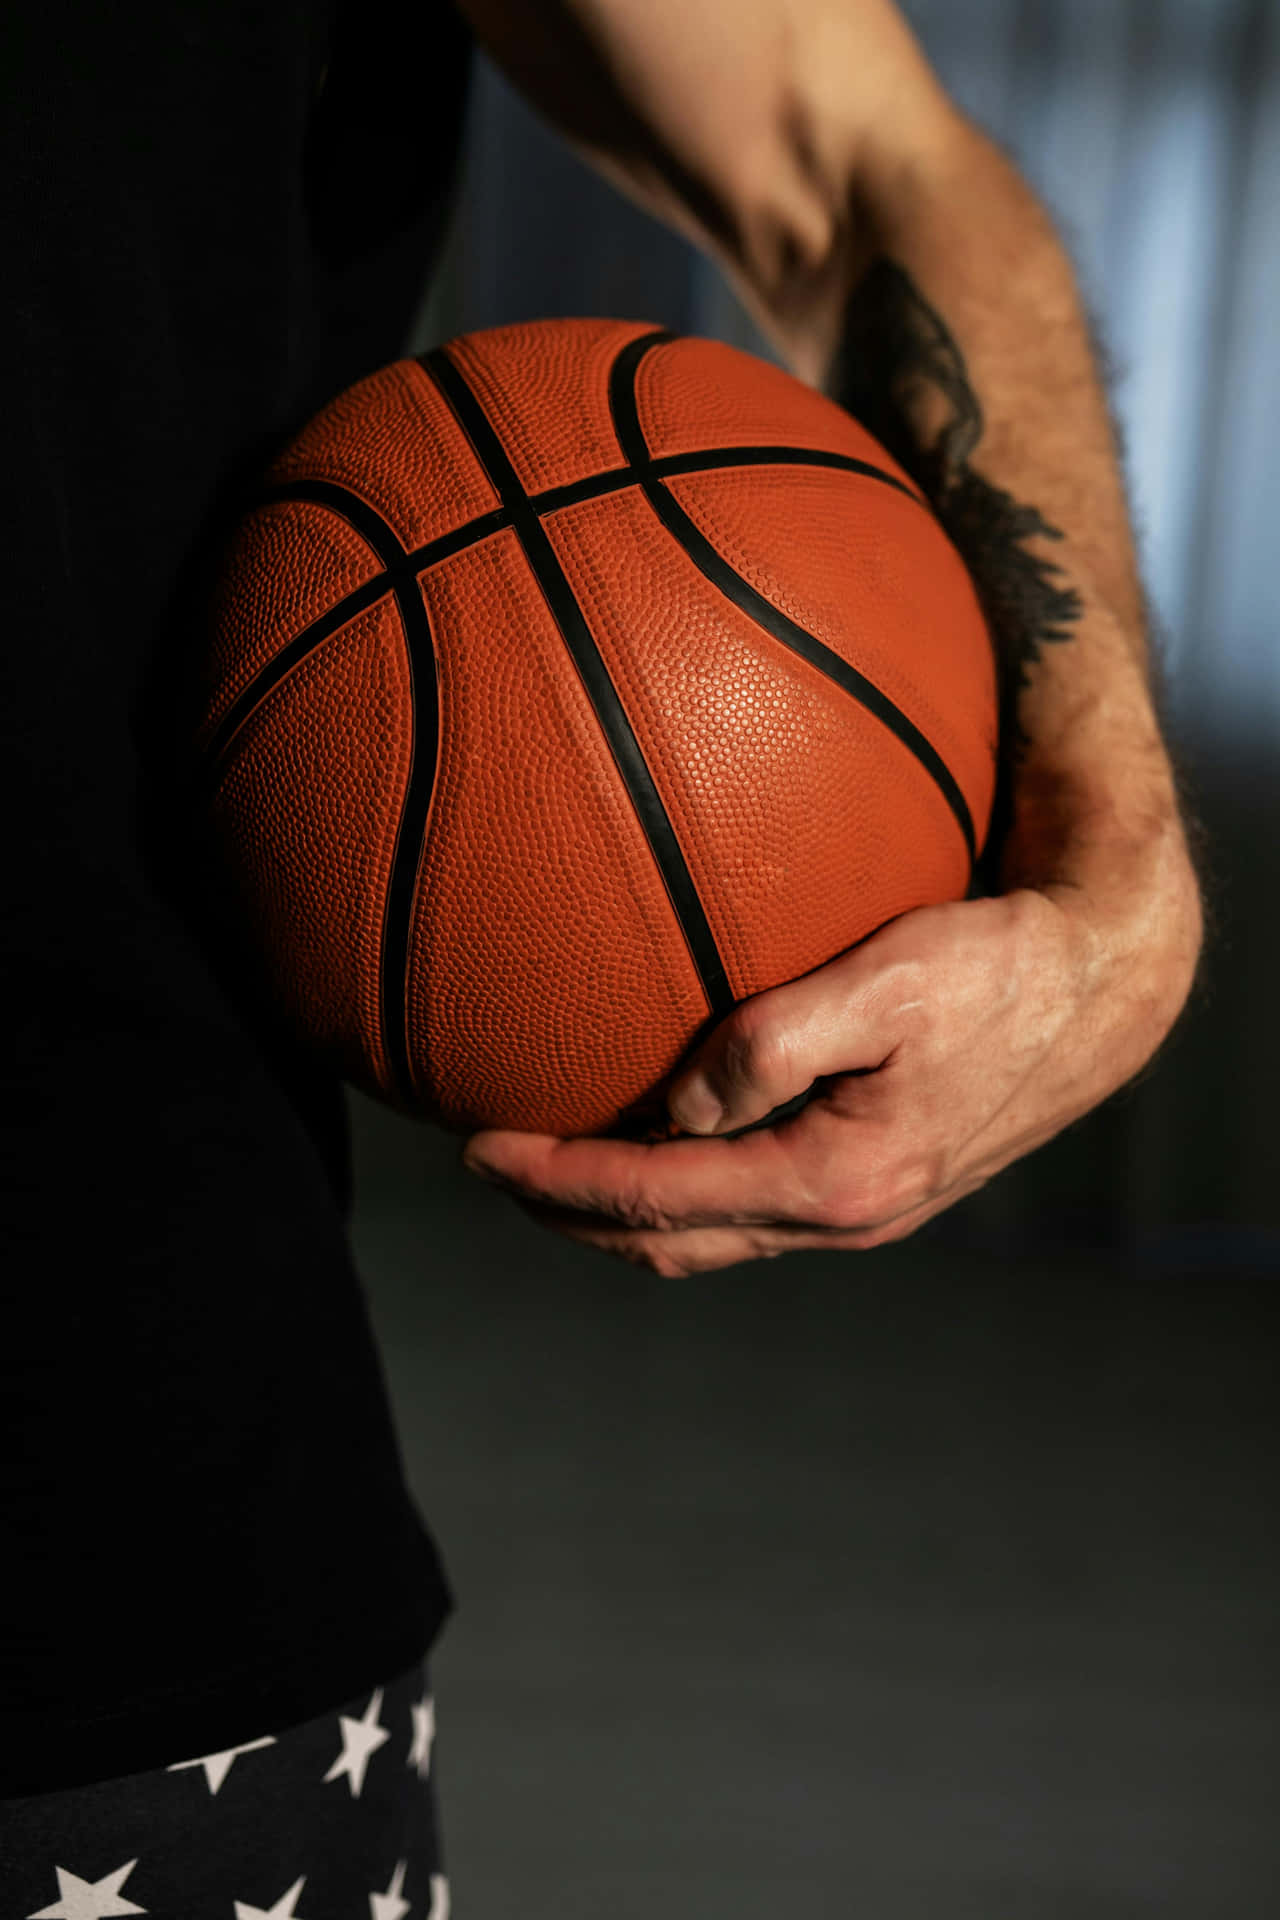 Basketball Grip Passion.jpg Wallpaper